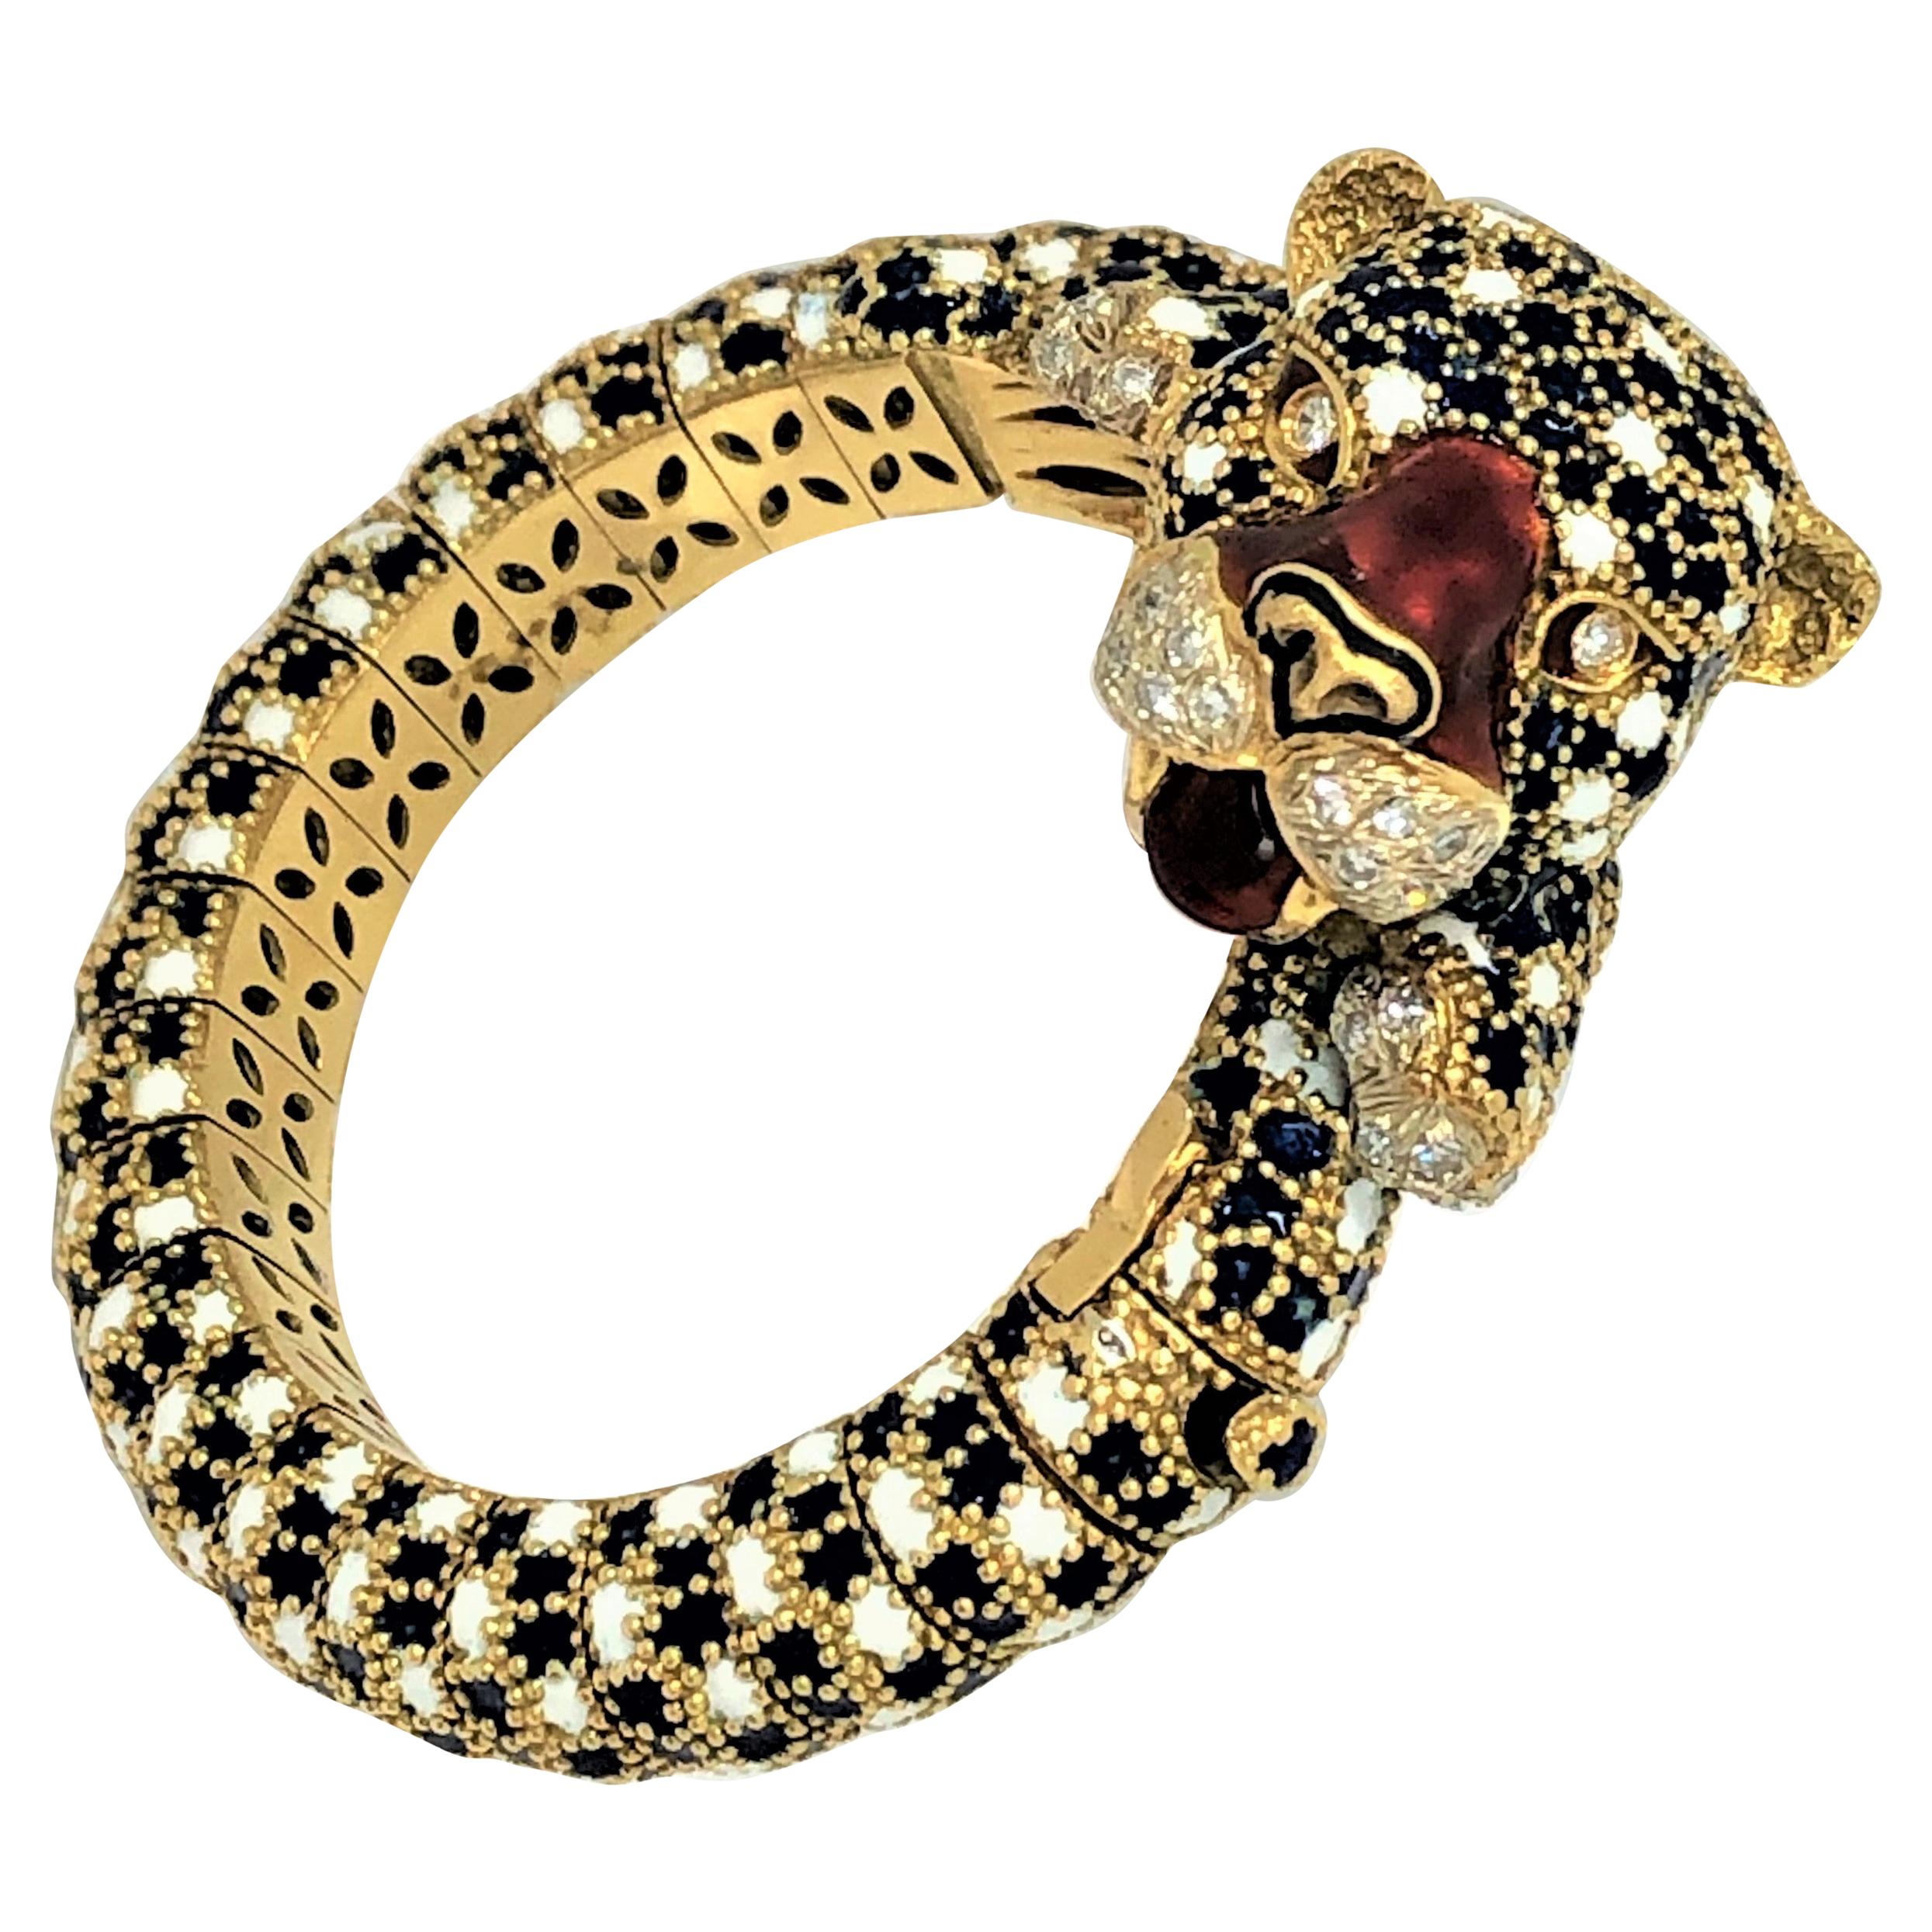 Frascarolo Leopard Bracelet with Enamel and Diamonds